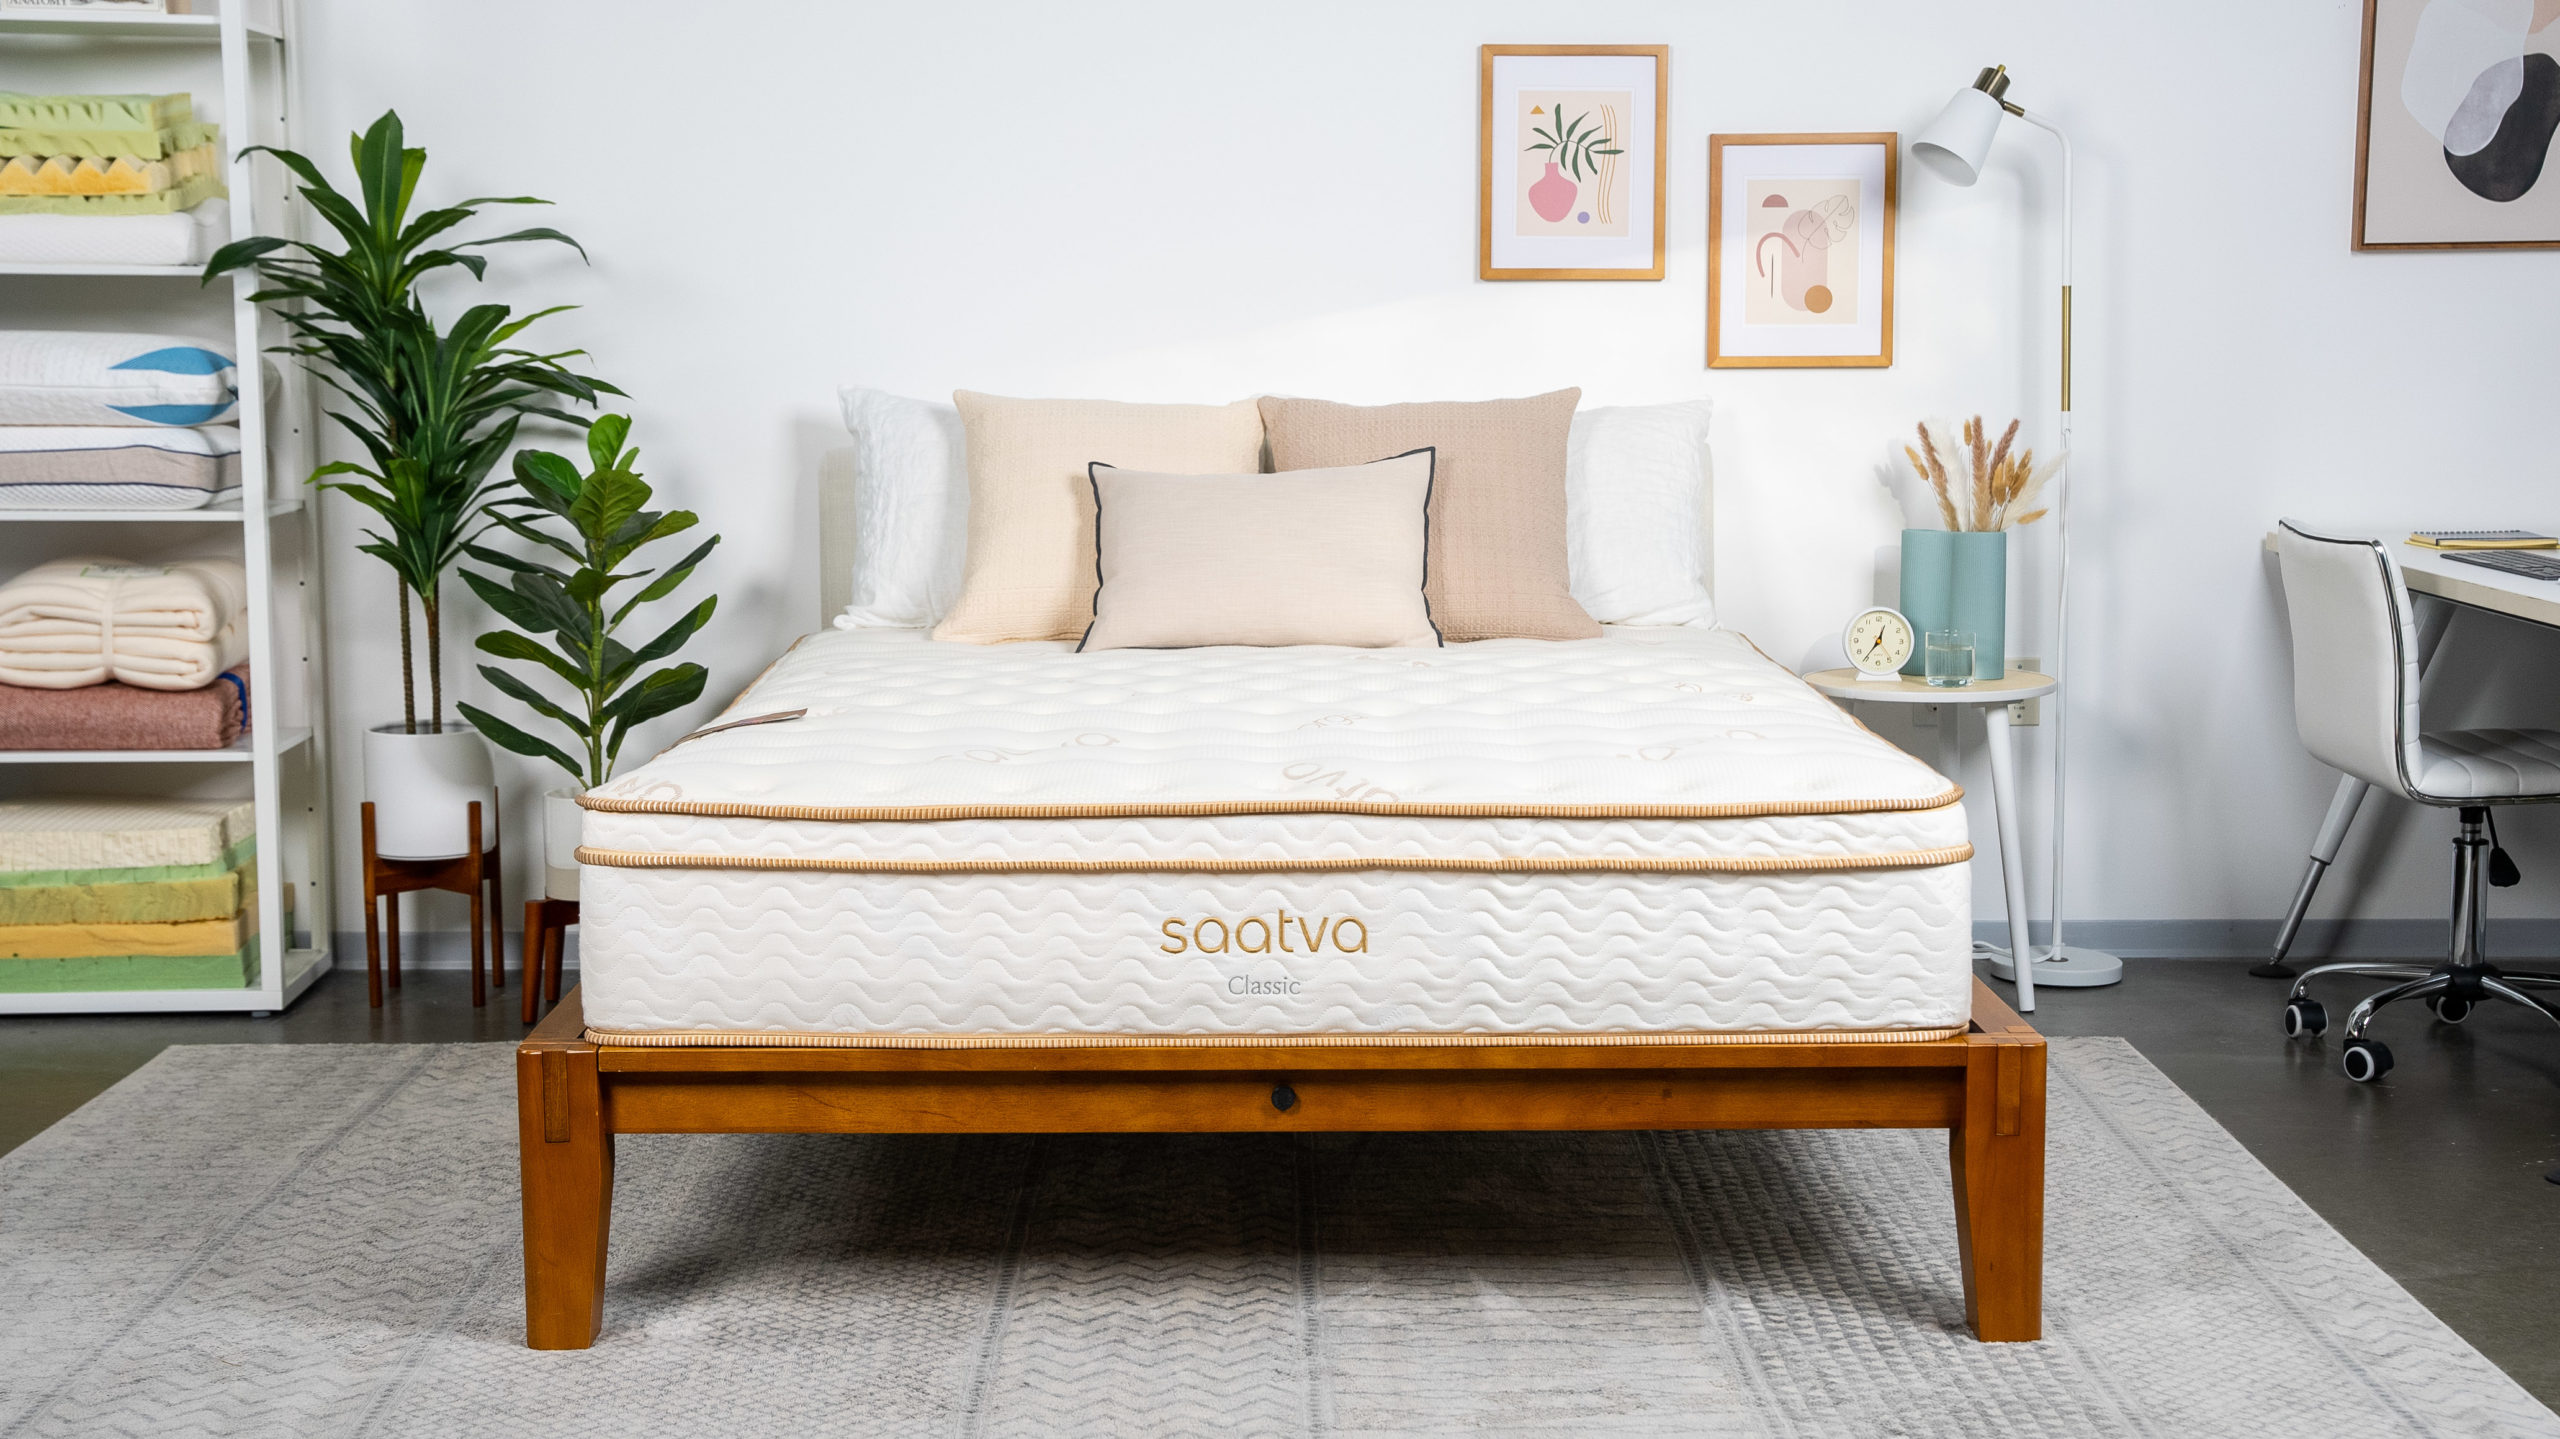 saatva mattress in ashley's furniture